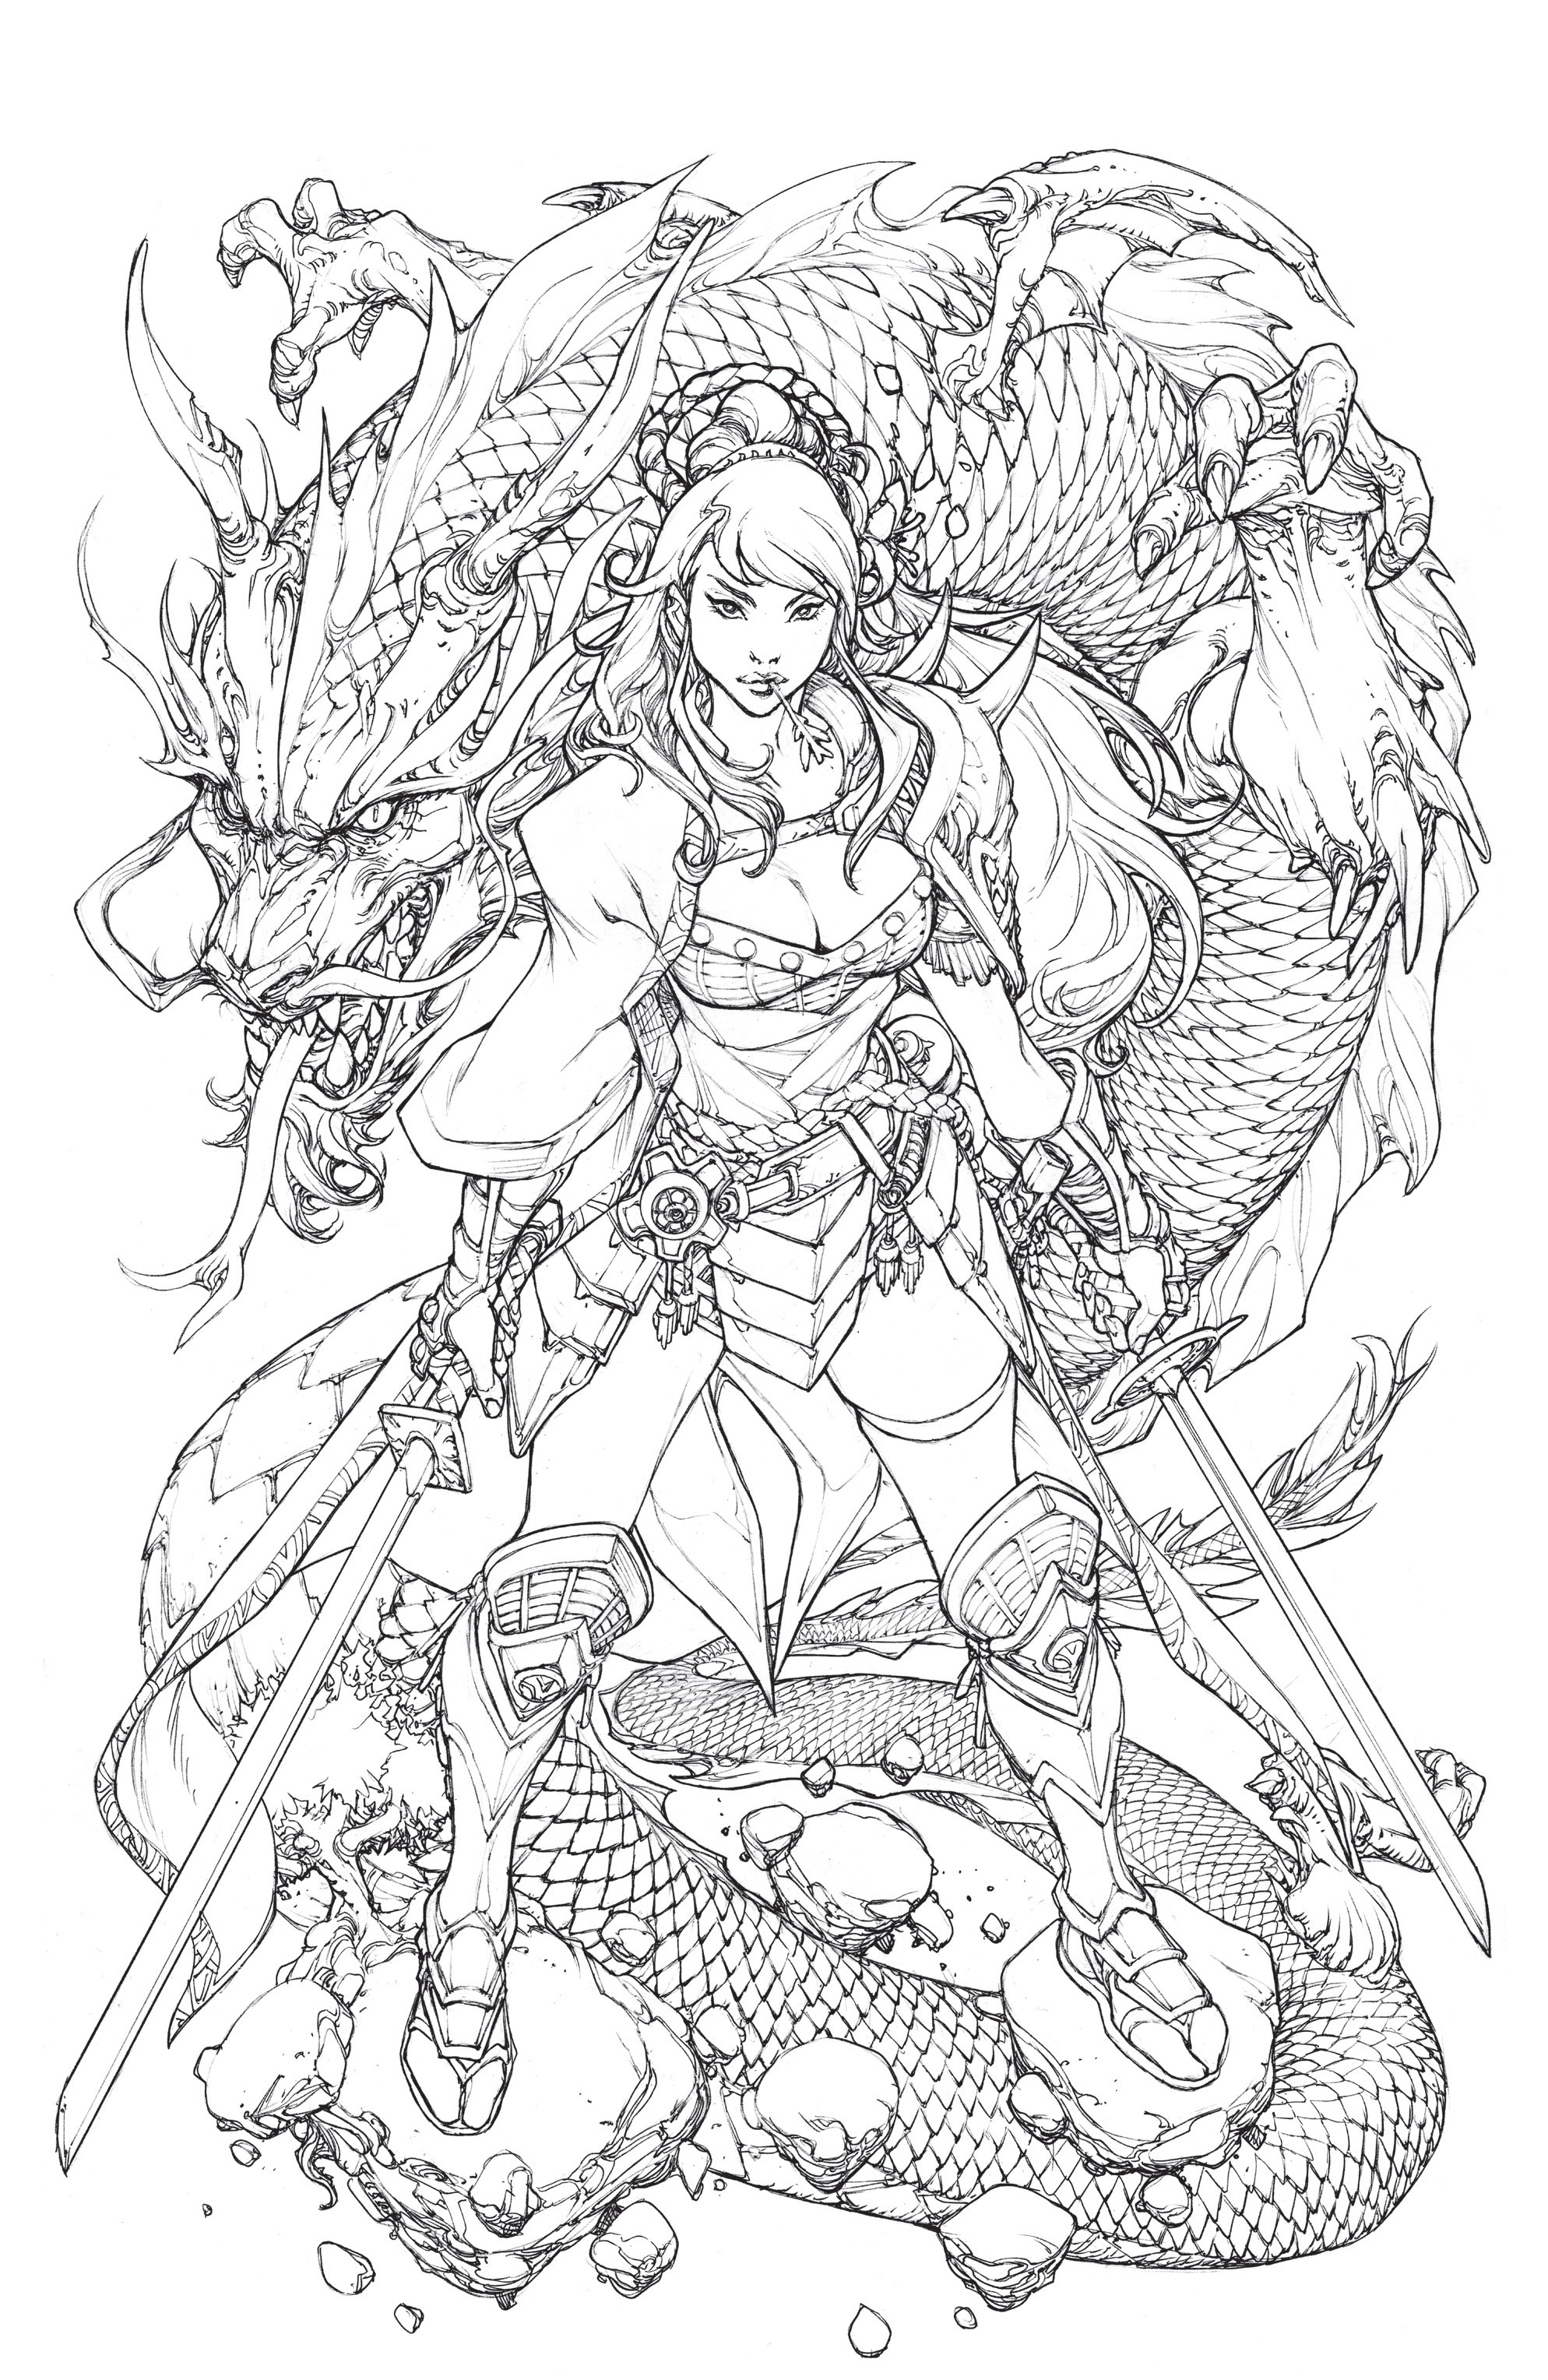 Read online Oniba: Swords of the Demon comic -  Issue # Full - 22